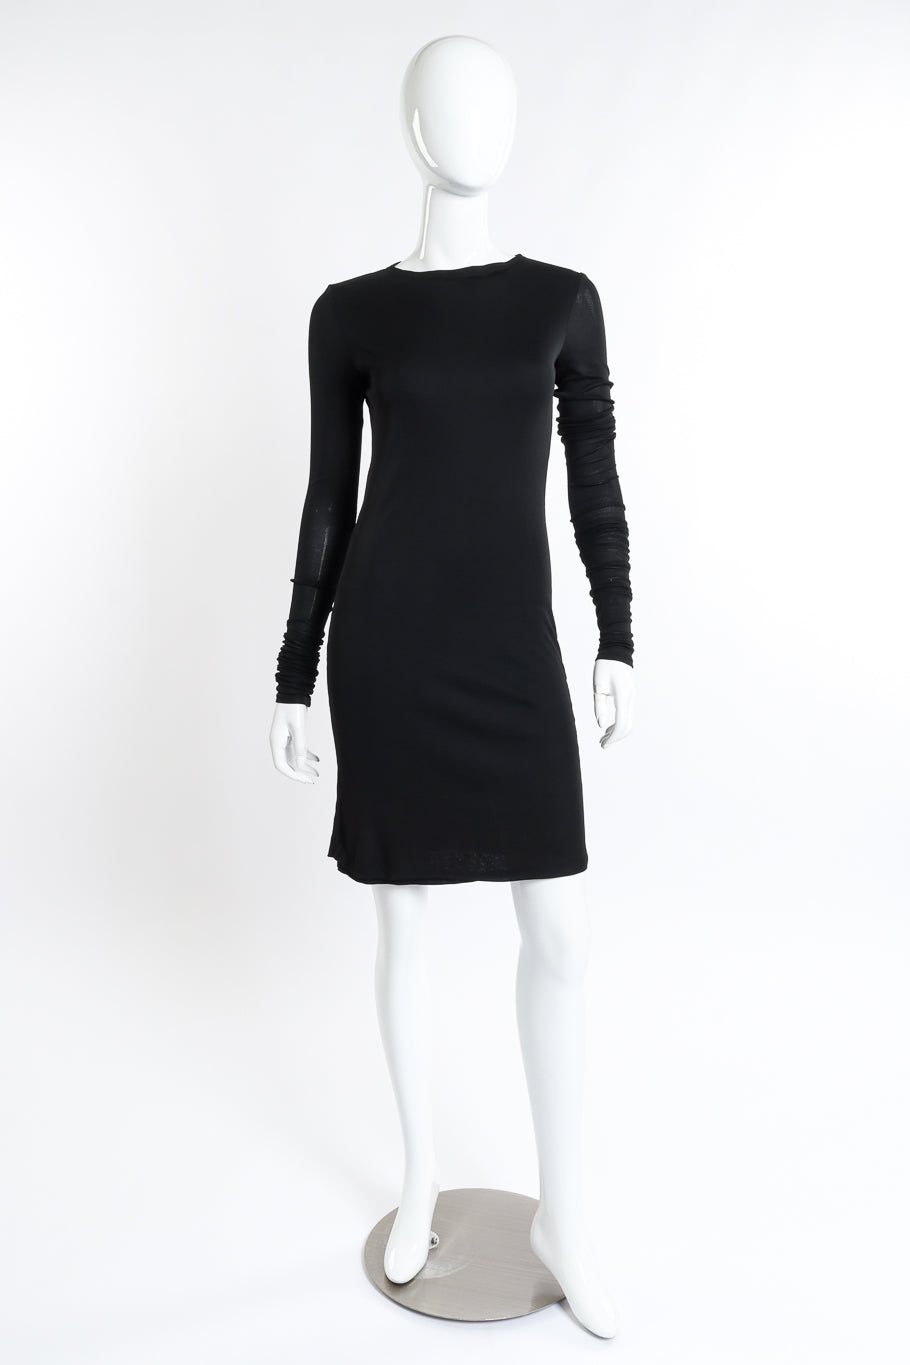 Vintage Rudi Gernreich Extra Long Sleeve Dress front on mannequin @recess la